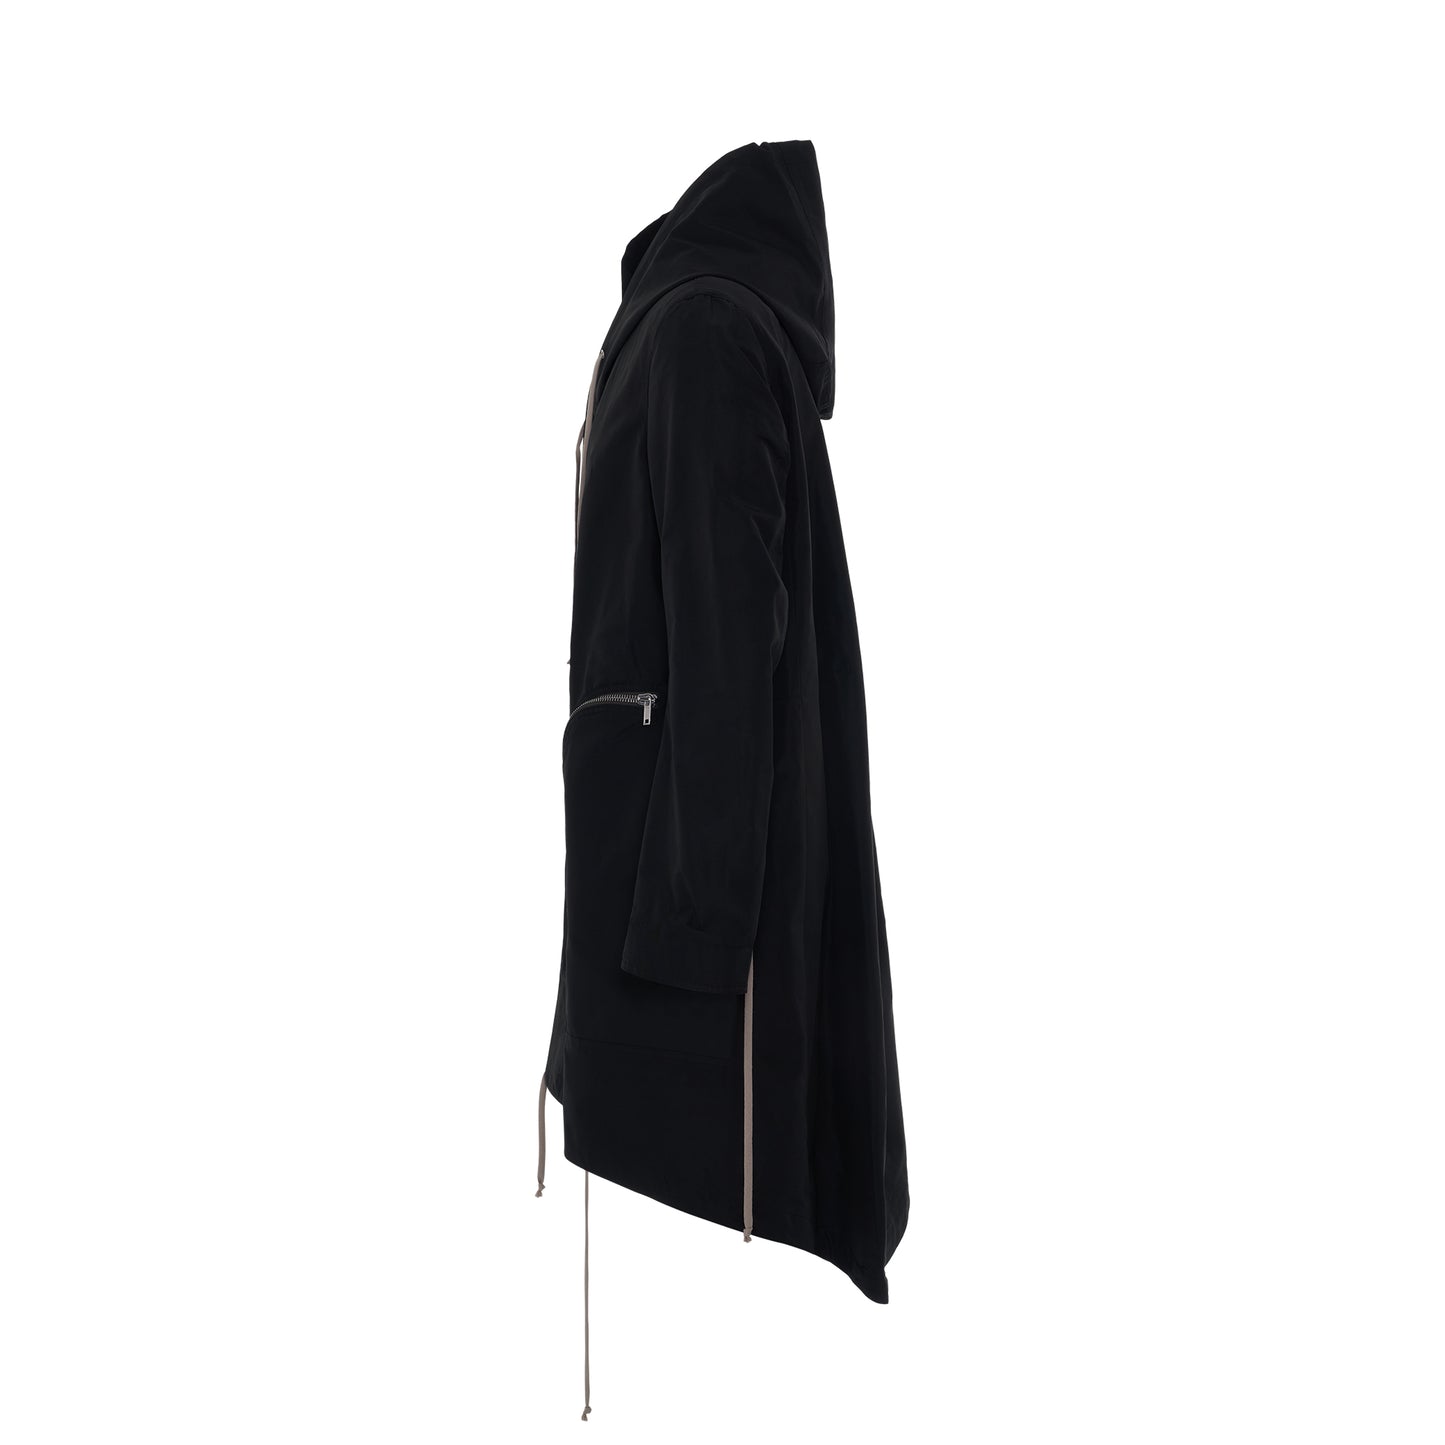 Bauhaus Fishtail Coat with Hood in Black